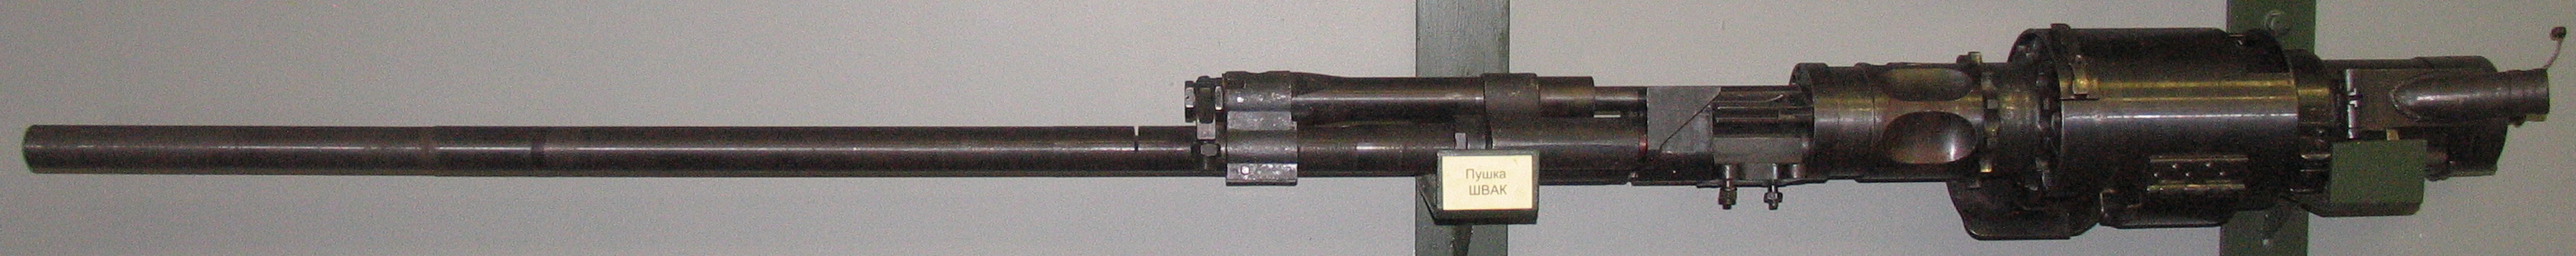 20 мм мотор пушка швак